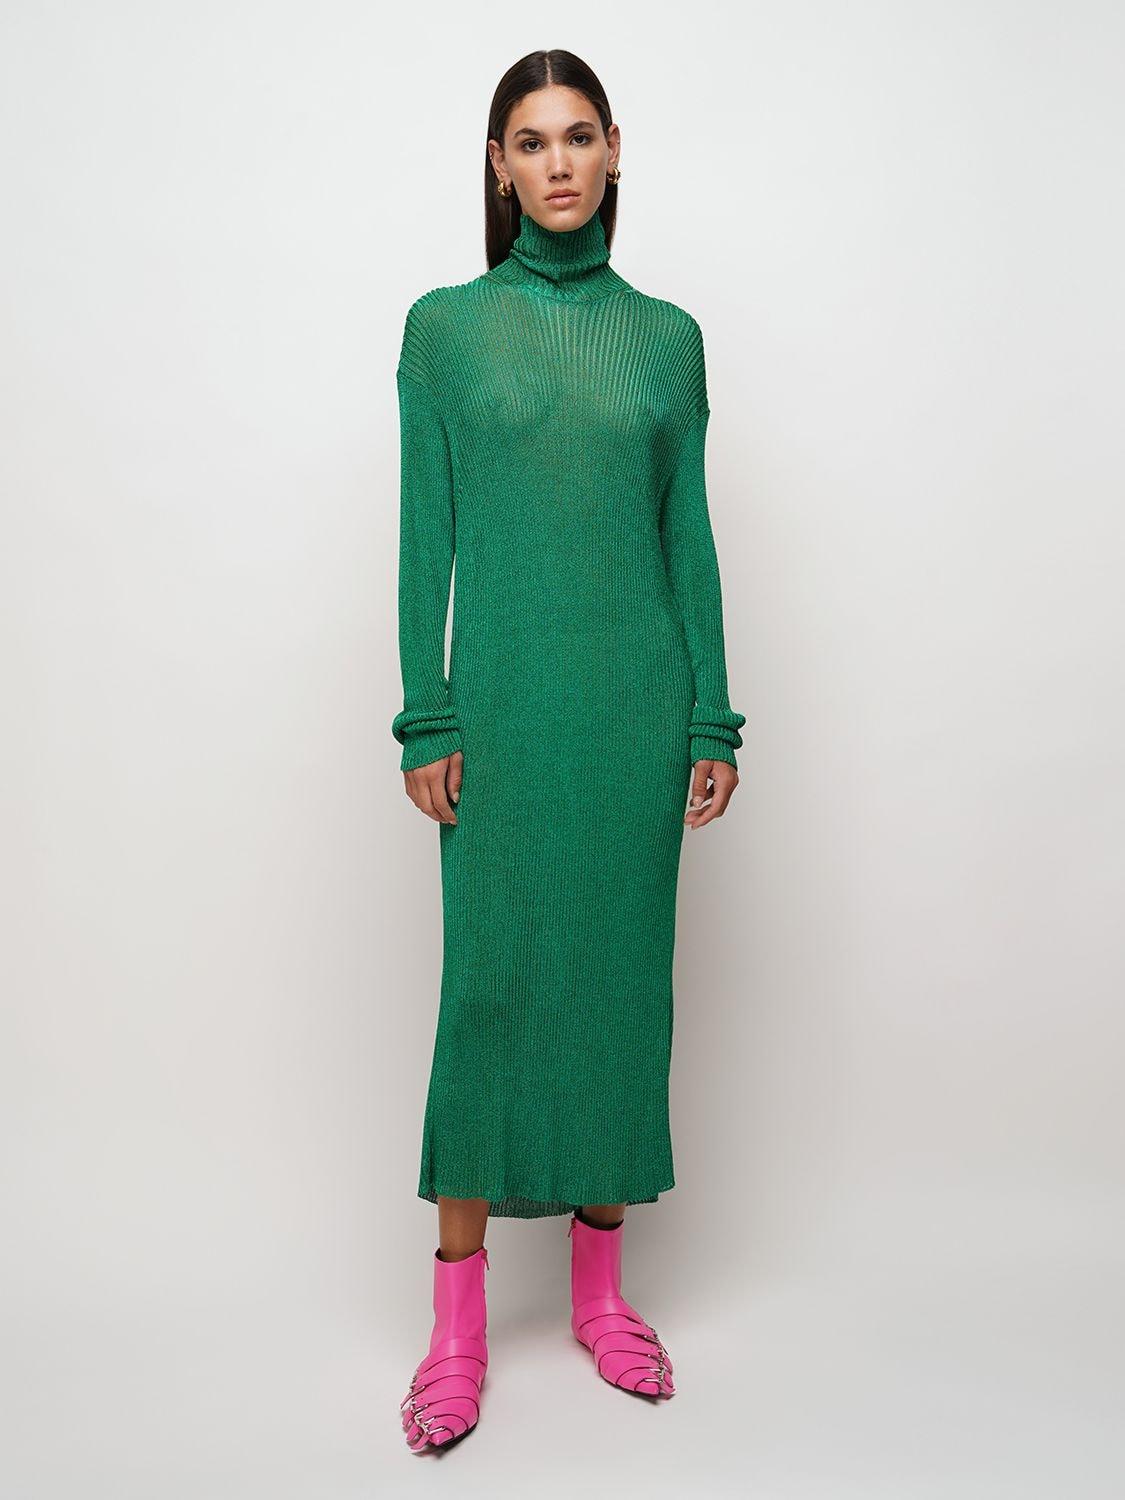 Balenciaga Metallic Knit Rib High Neck Midi Dress in Green | Lyst